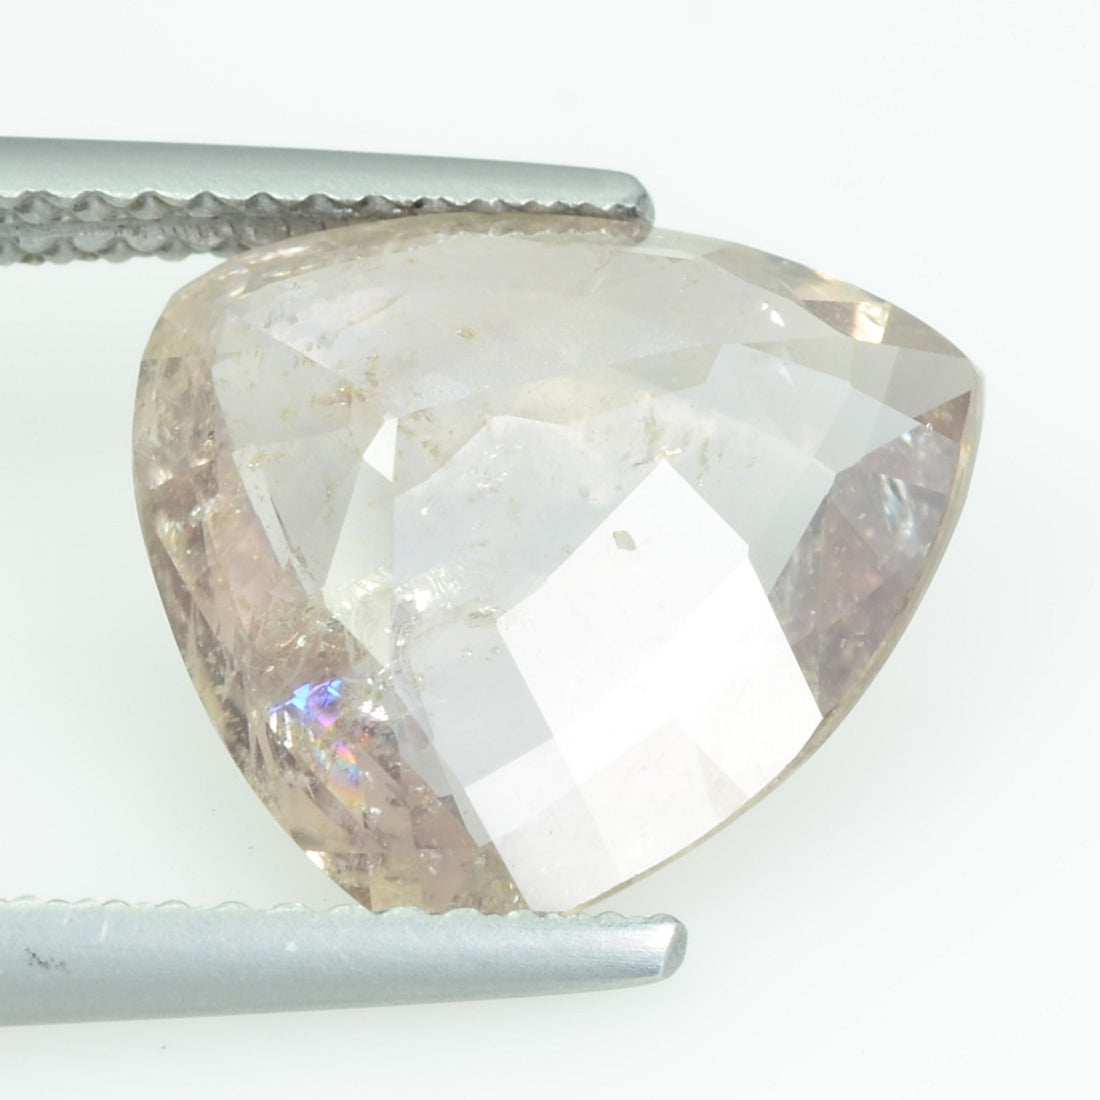 5.64 Cts Natural Peach Sapphire Loose Gemstone Trillion Cut